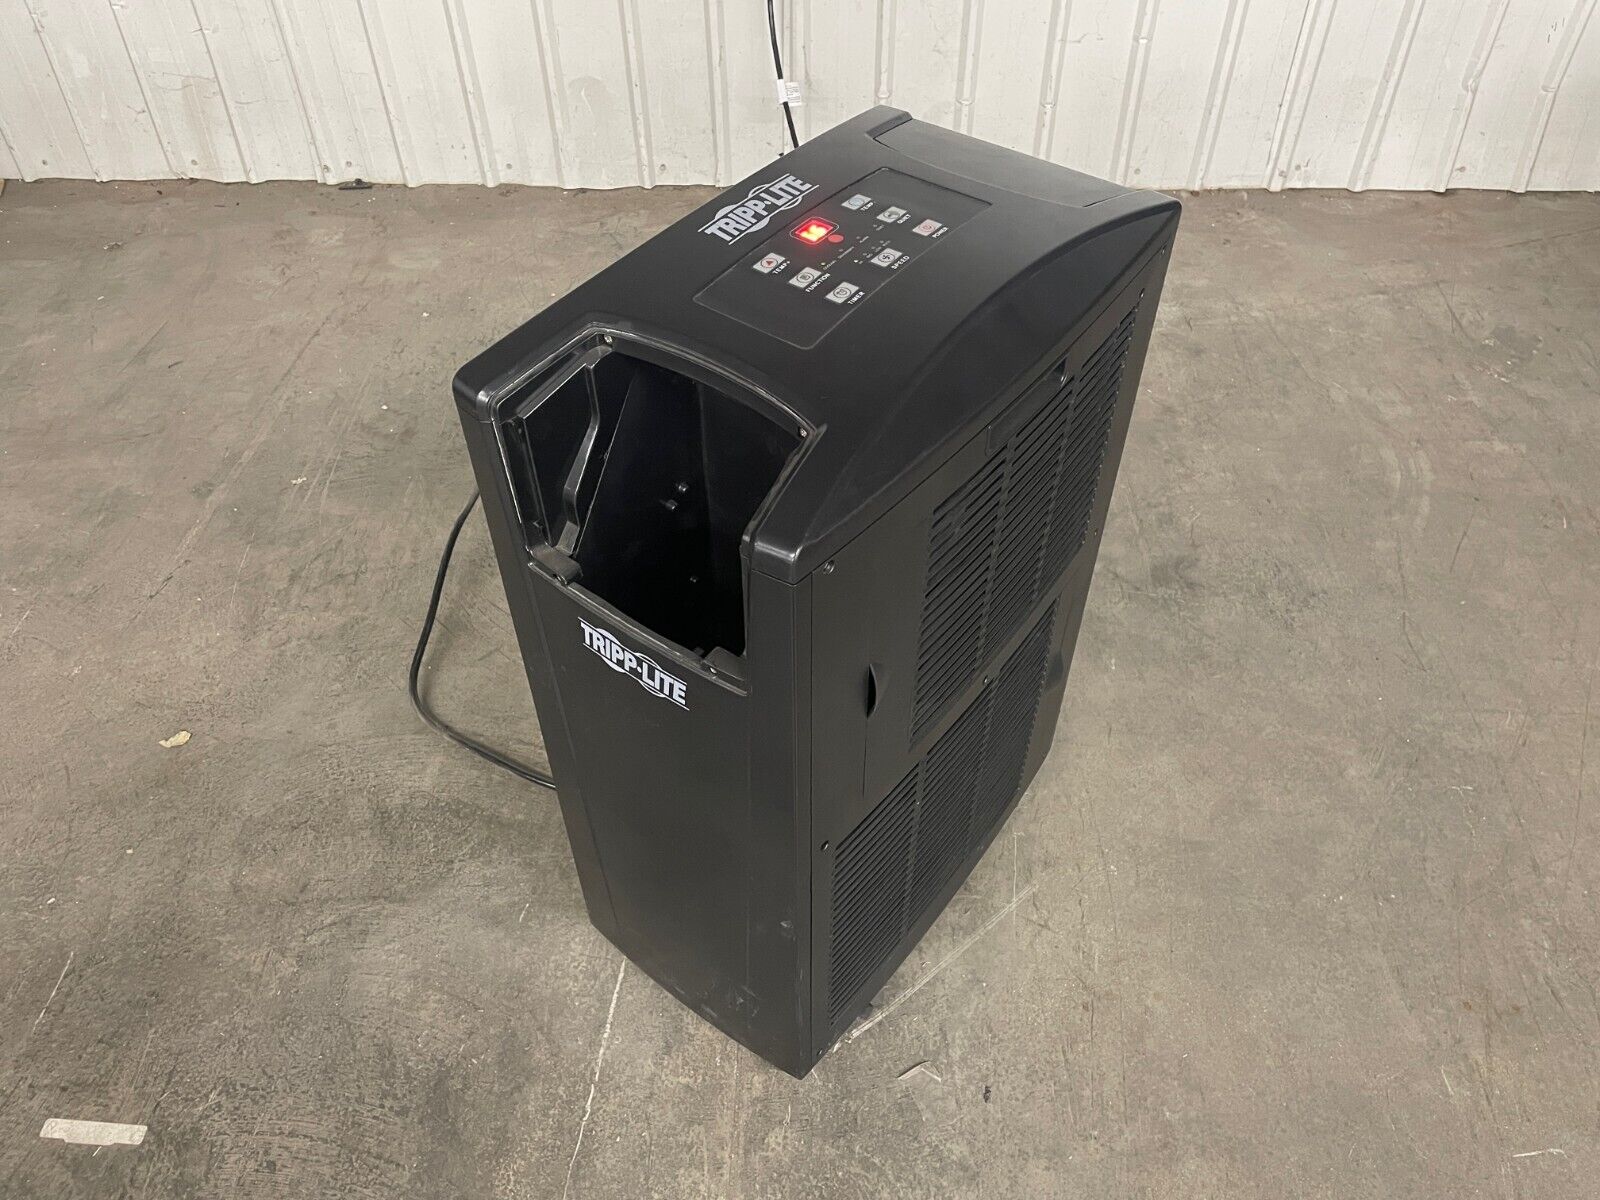 Tripp-Lite SRCOOL12K Portable Air Conditioning Unit, Intertek